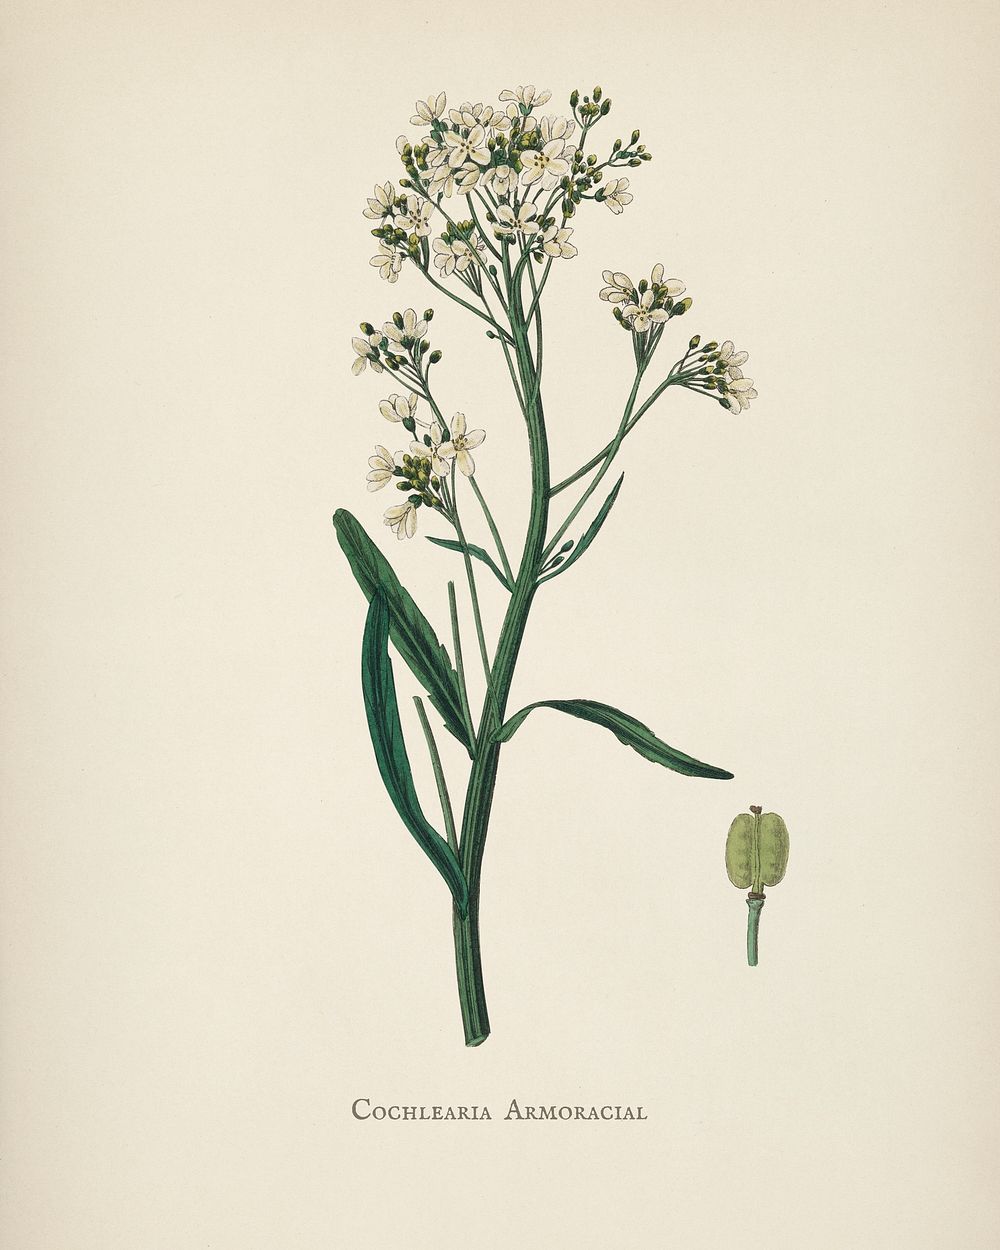 Horseradish (Cochlearia armoracia) illustration from Medical Botany (1836) by John Stephenson and James Morss Churchill.